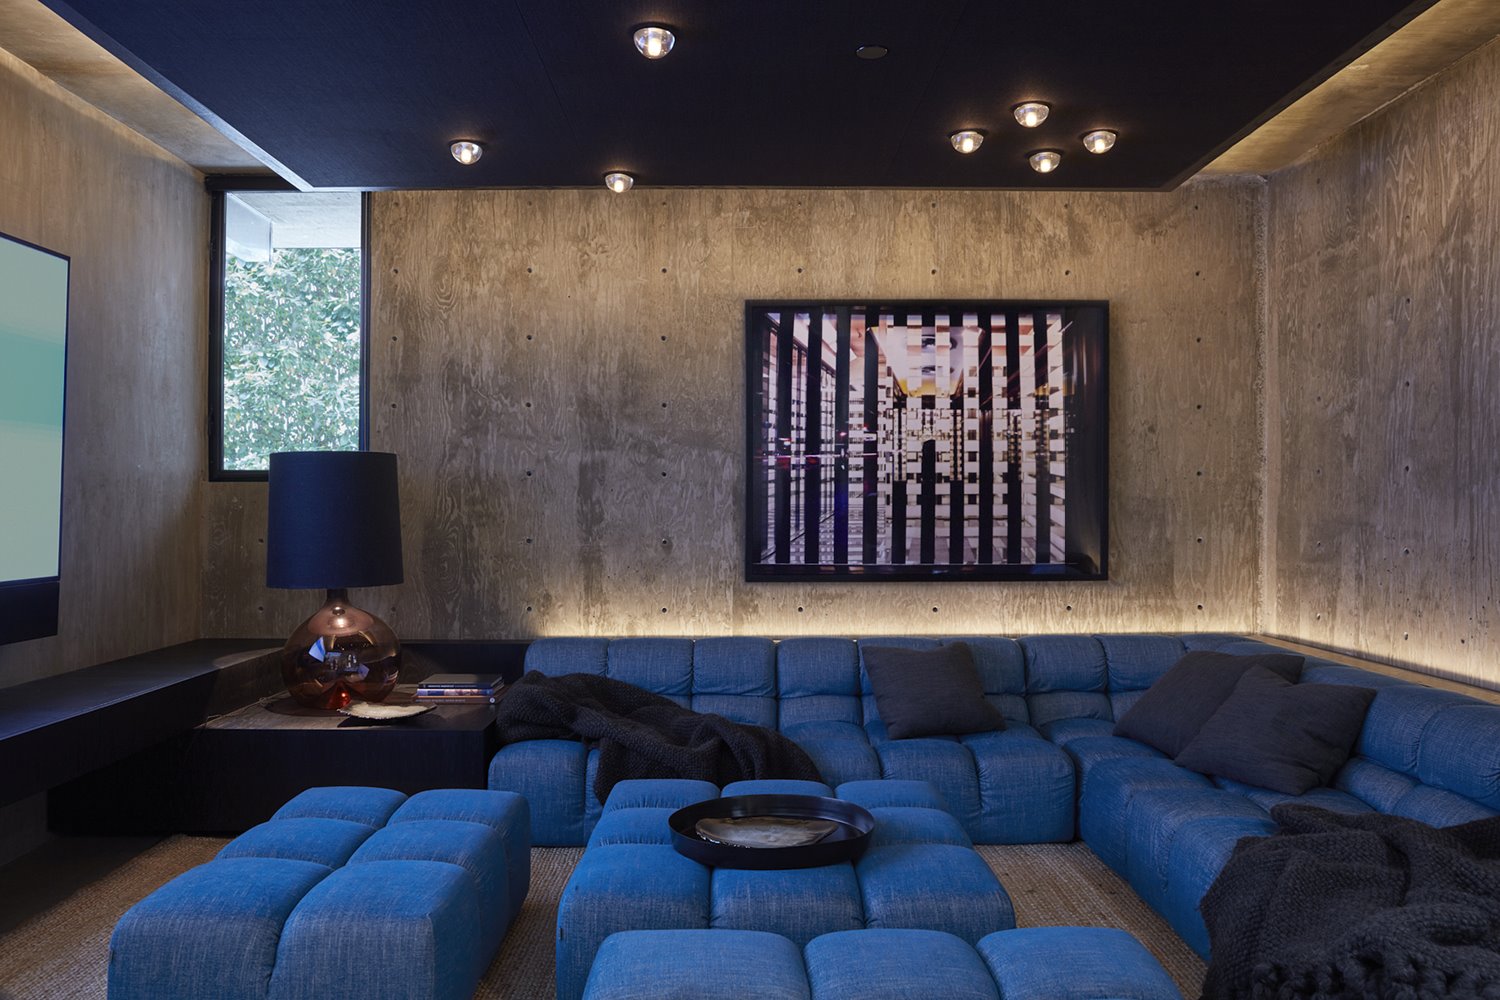 Sala de cine con sofás y poufs en azul, paredes de hormigón, luminaria de sobremesa con pantalla negra y gra pantalla de televisión